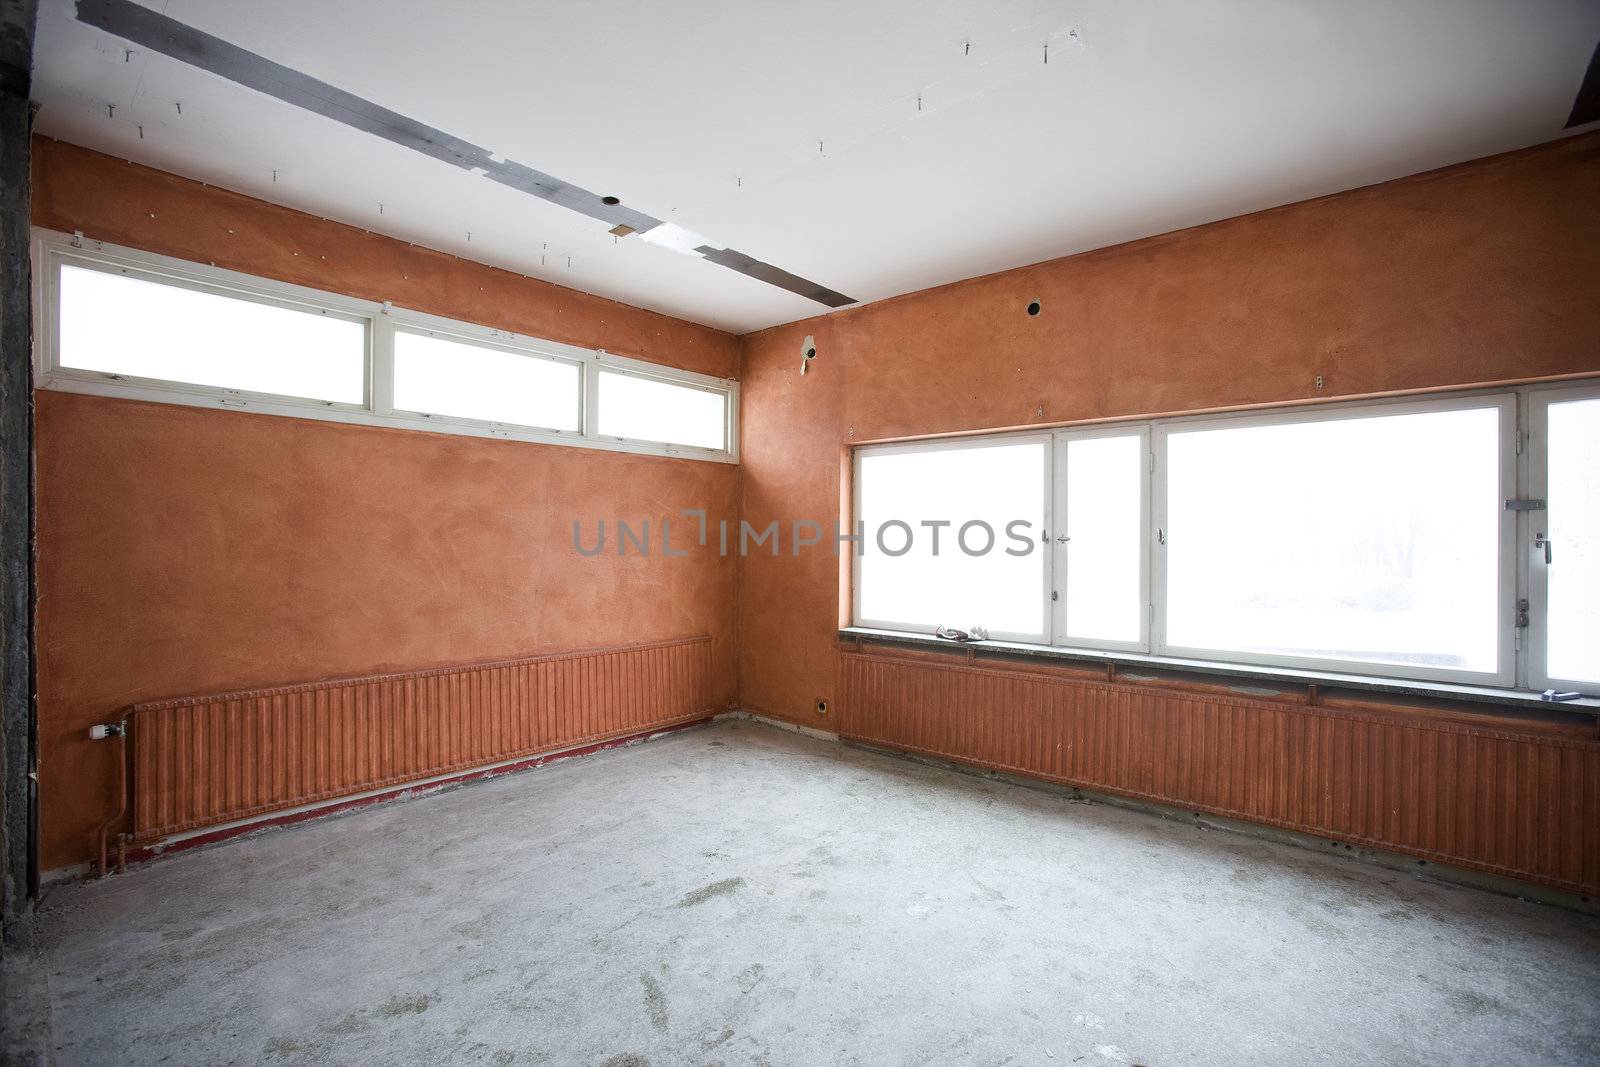 Empty interior by gemenacom